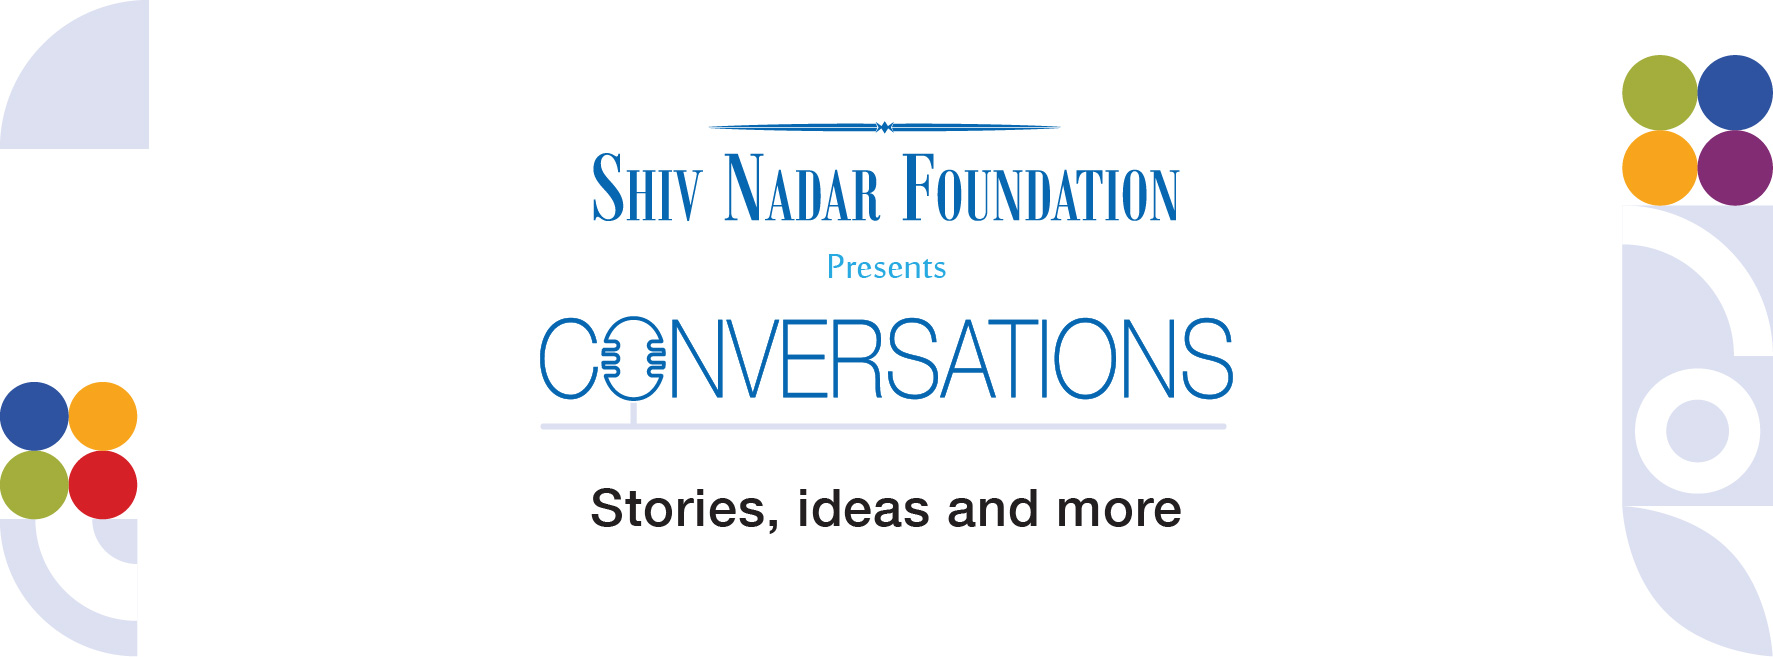 Shiv Nadar Foundation presents Conversations